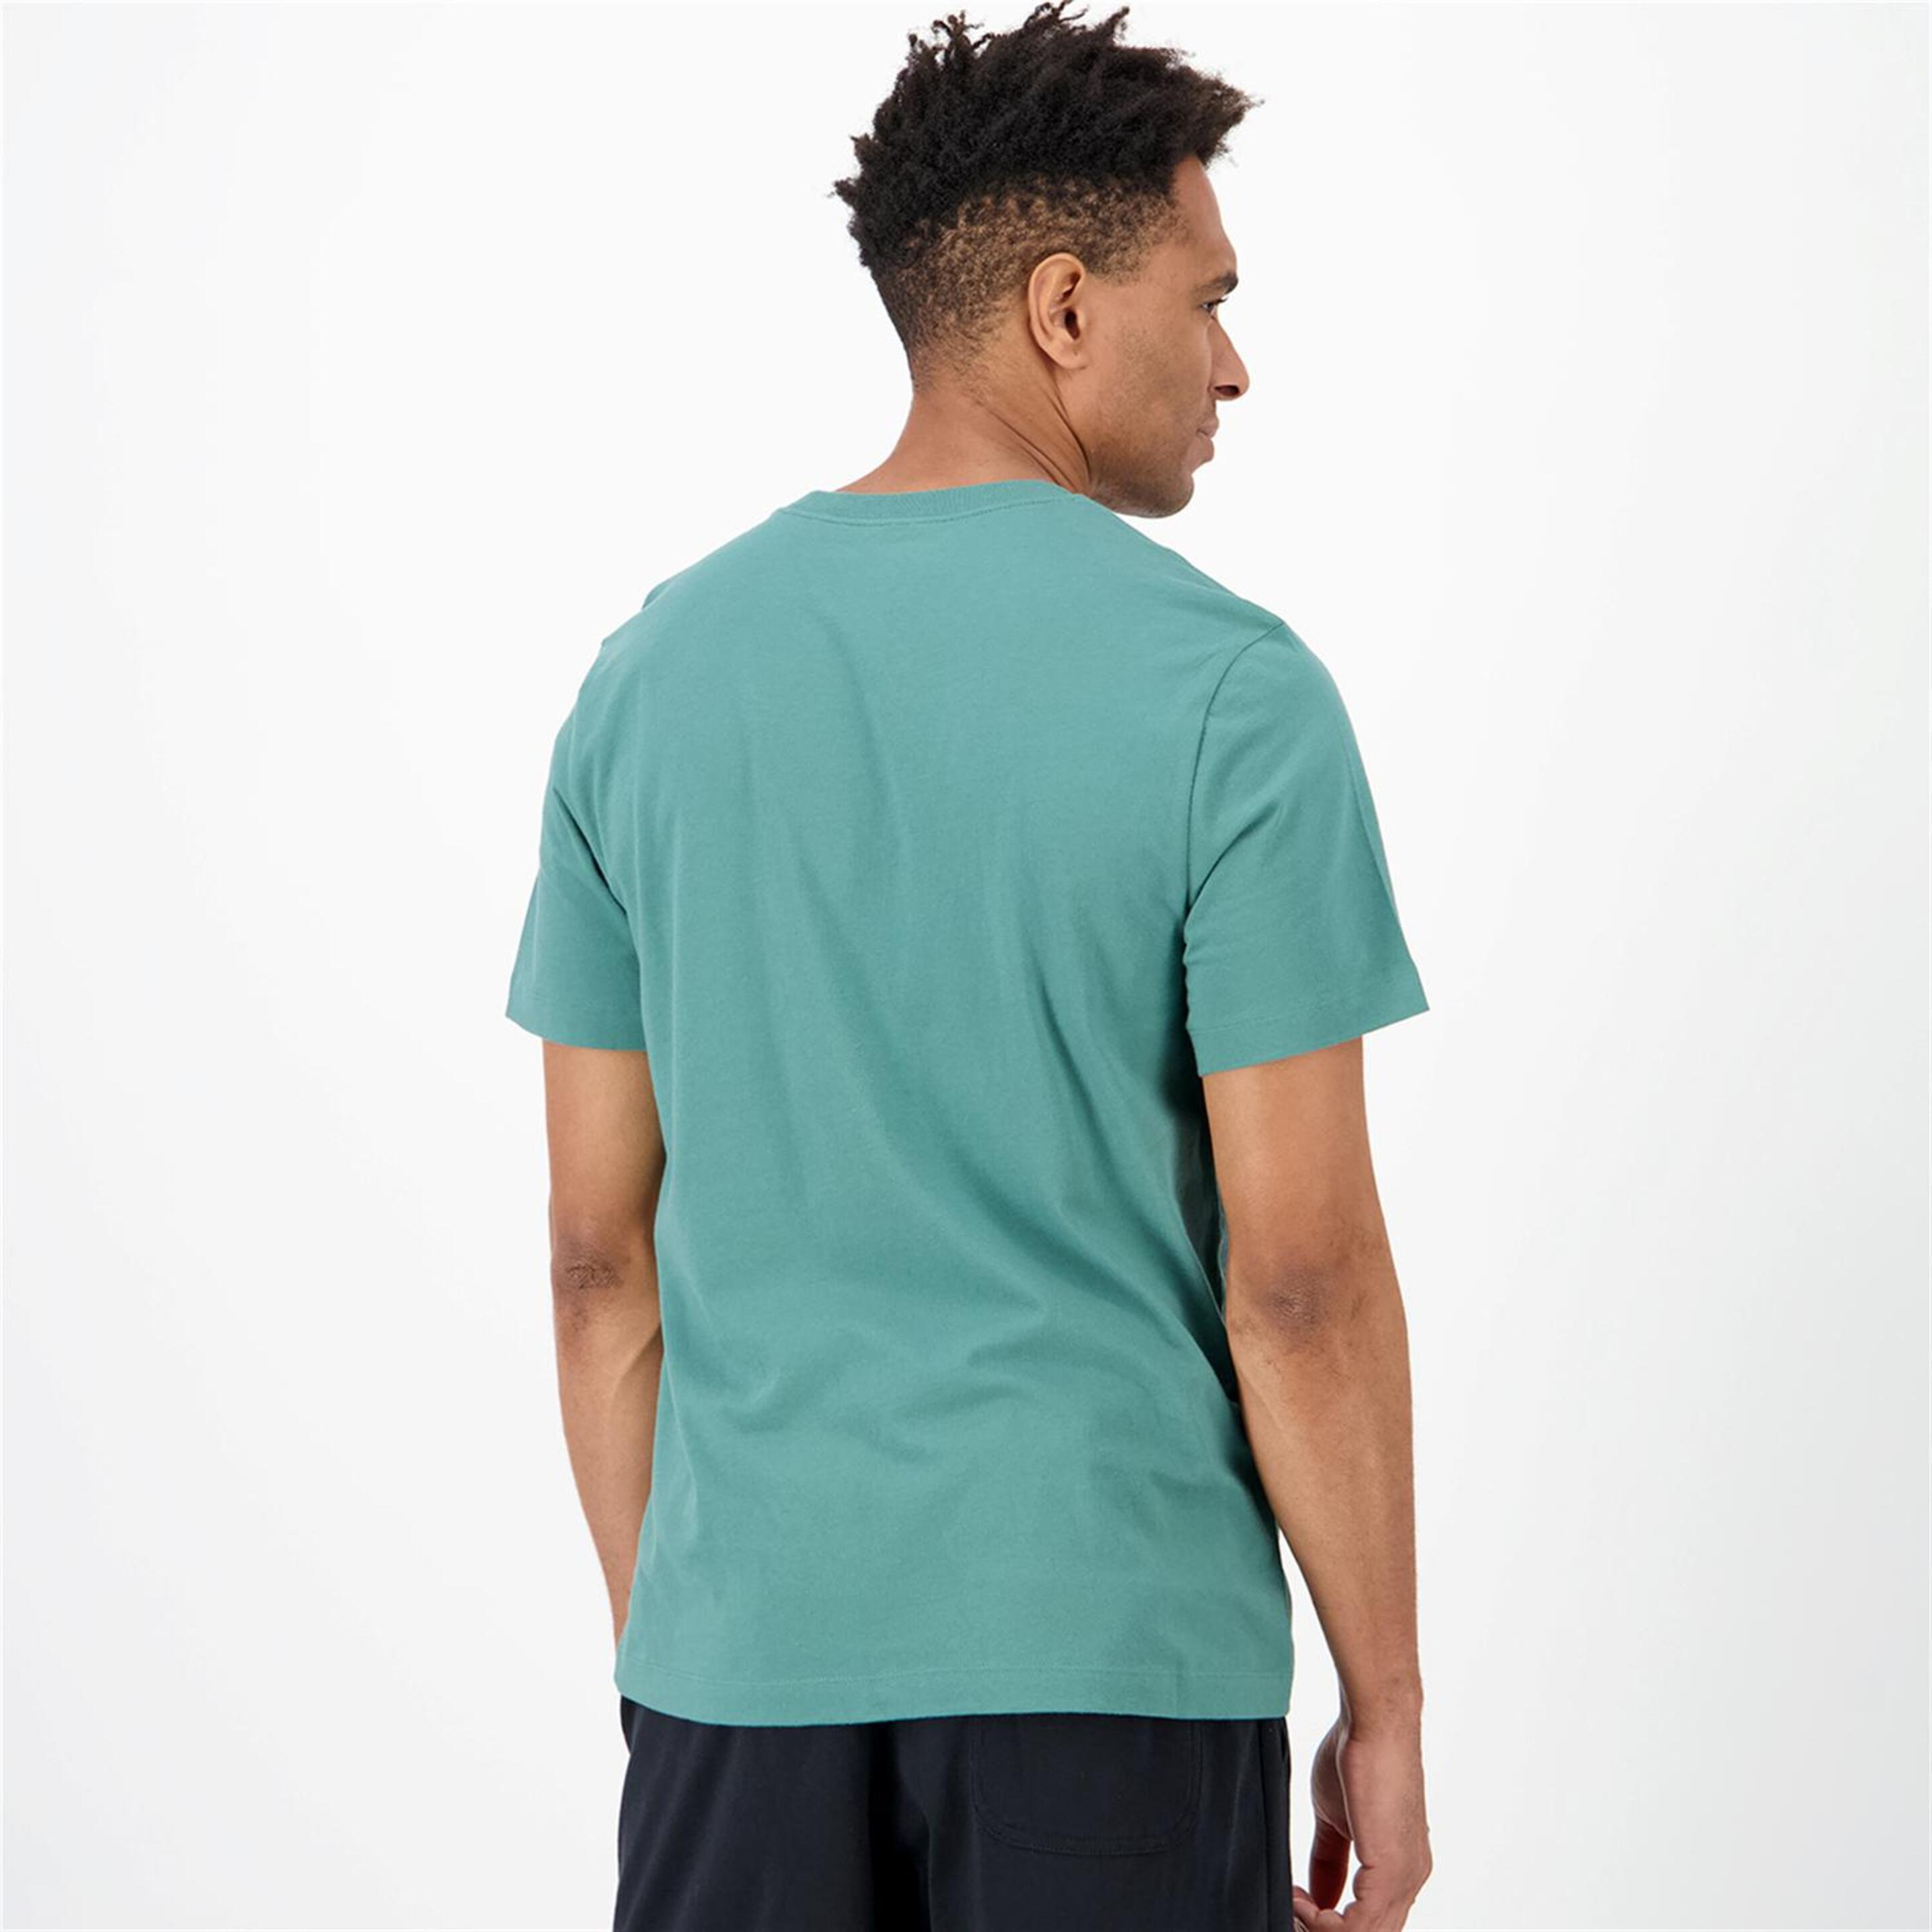 Nike Swoosh - Verde - Camiseta Hombre